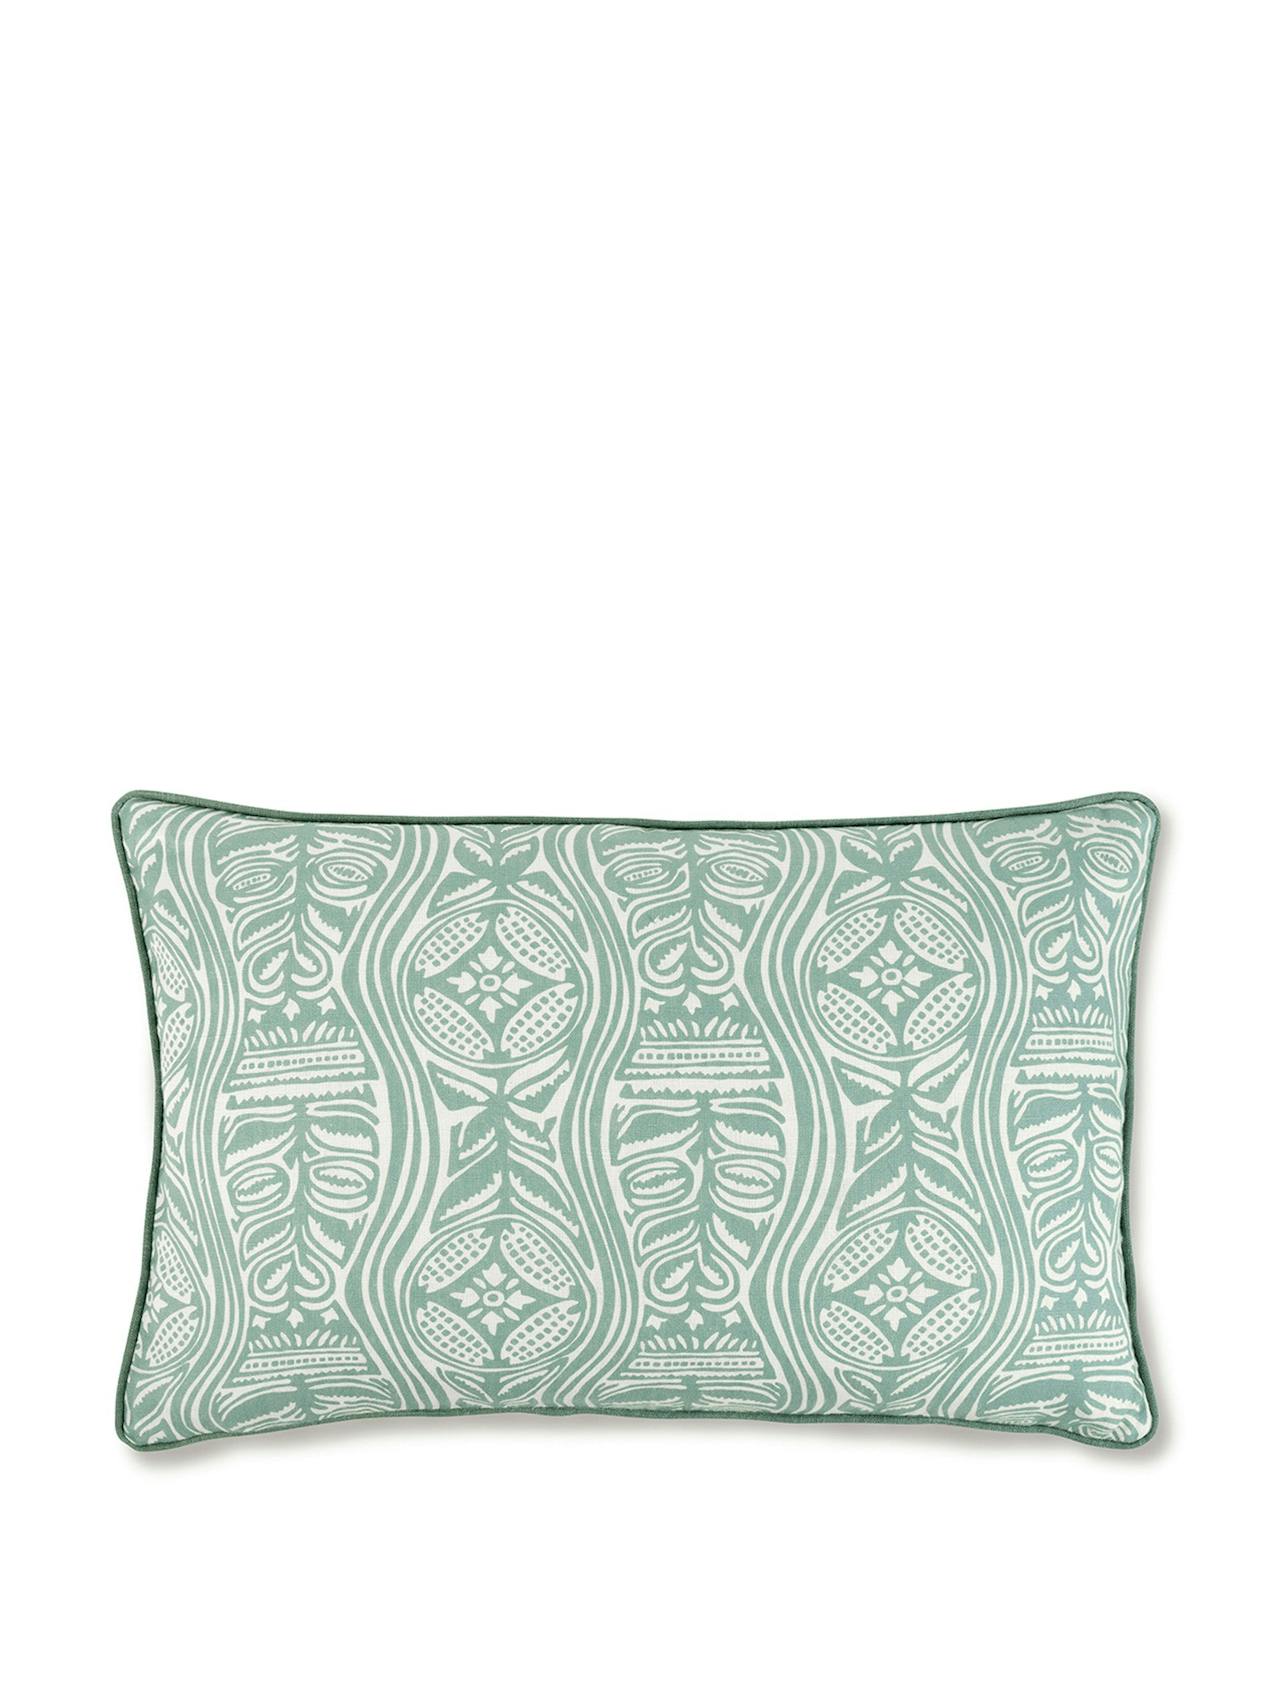 Dacha print cushion in teal with venetian linen velvet in midnight blue